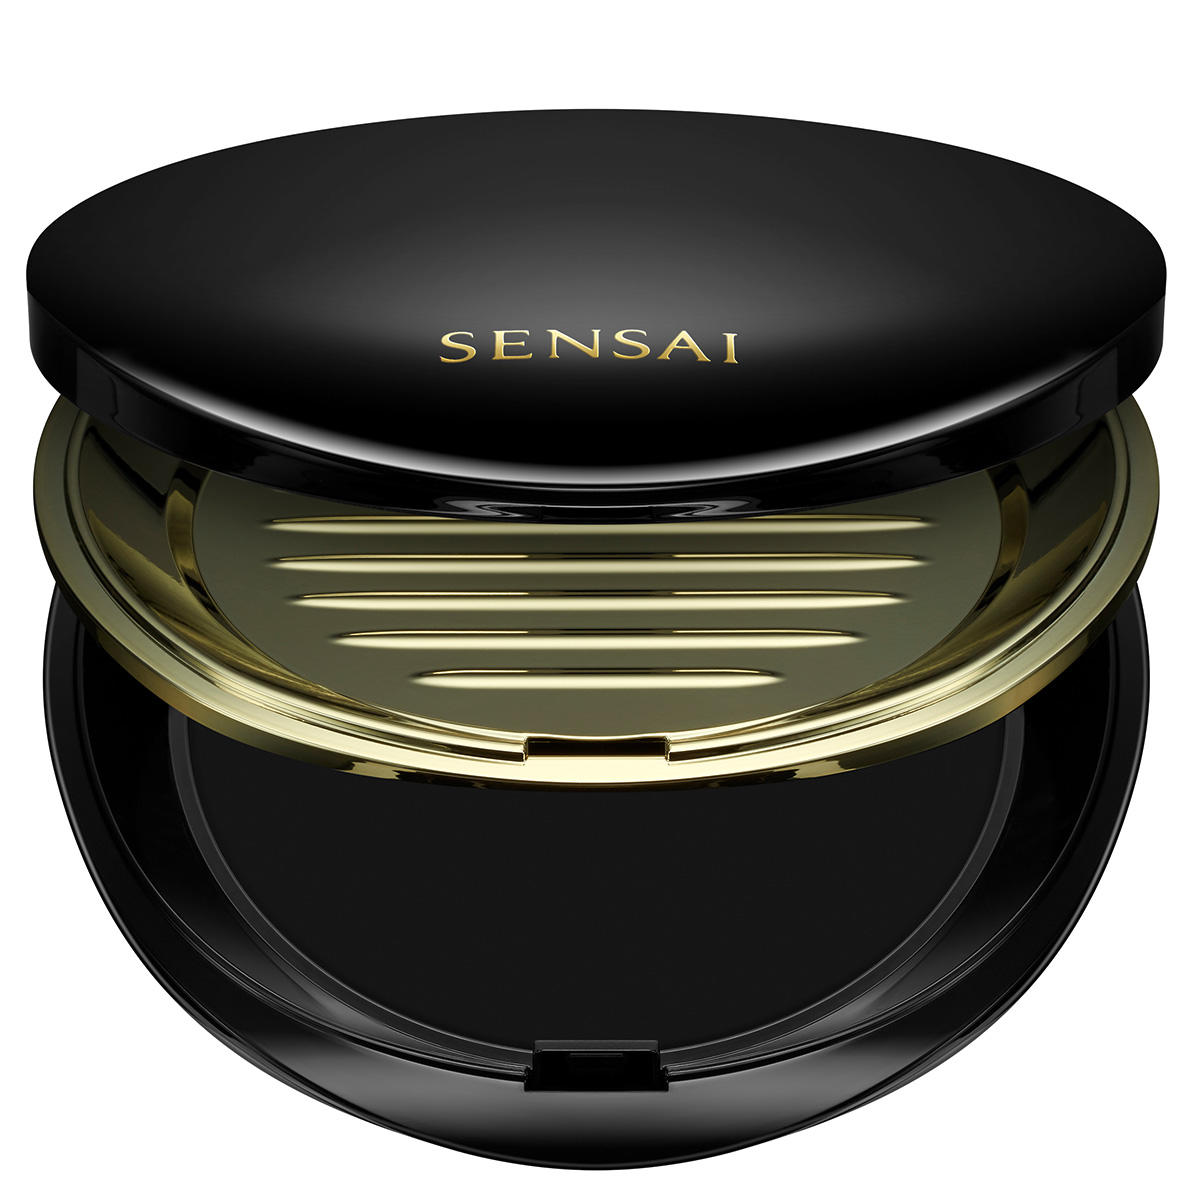 SENSAI Compact Case for Total Finish  - 3